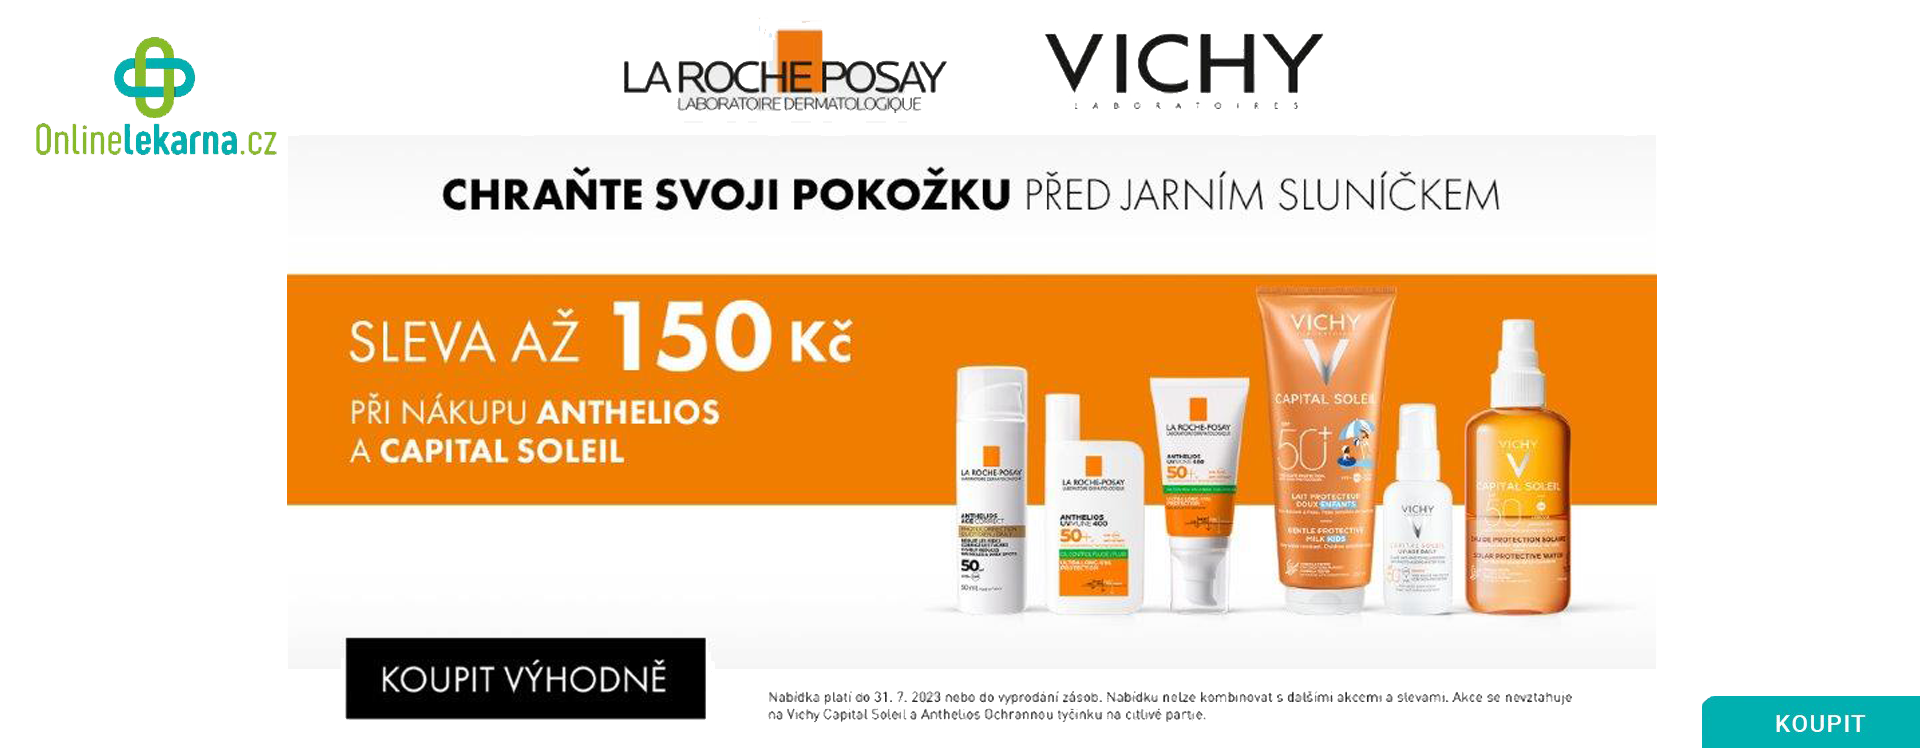 Onlinelekarna.cz | LRP+Vichy Akce